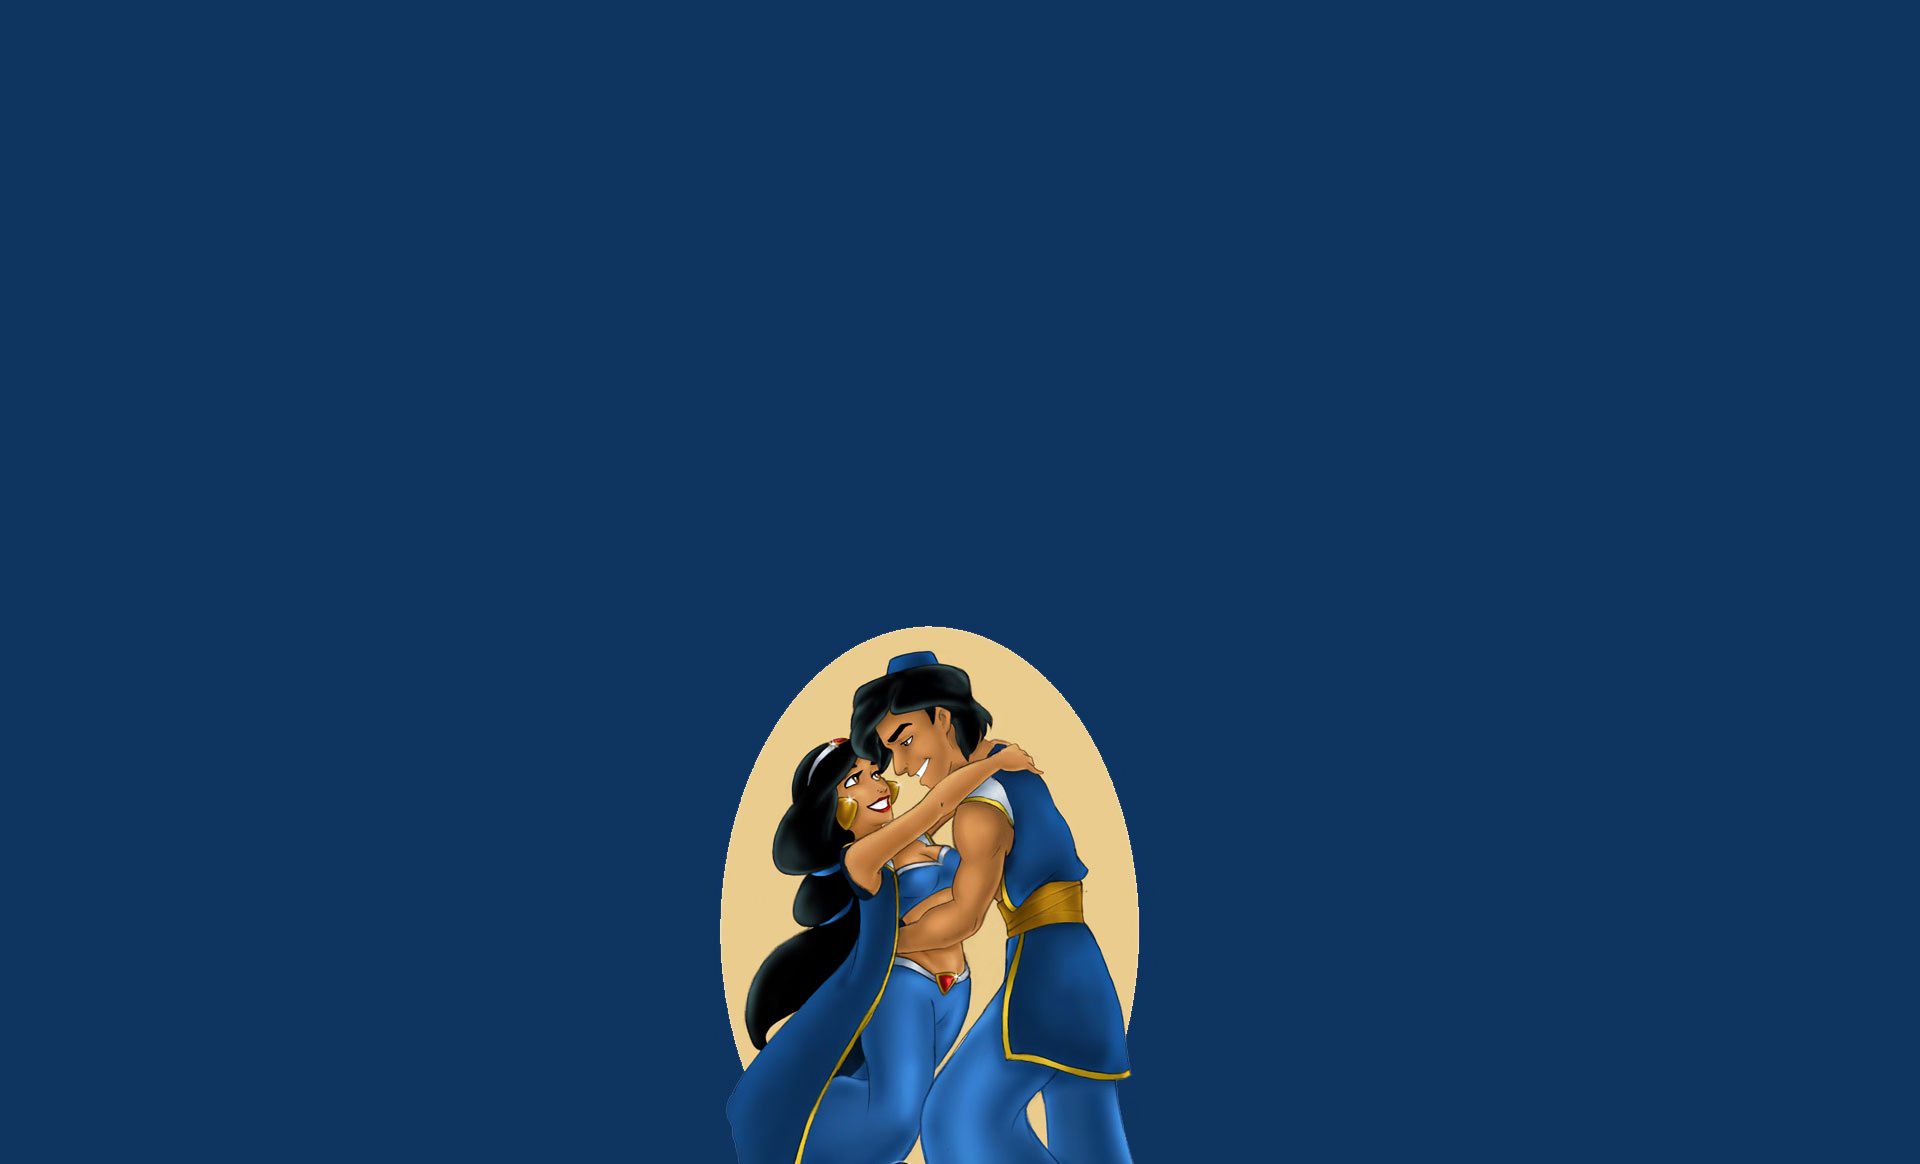 50338 Aladdin HD, Aladdin, Princess Jasmine - Rare Gallery HD Wallpapers